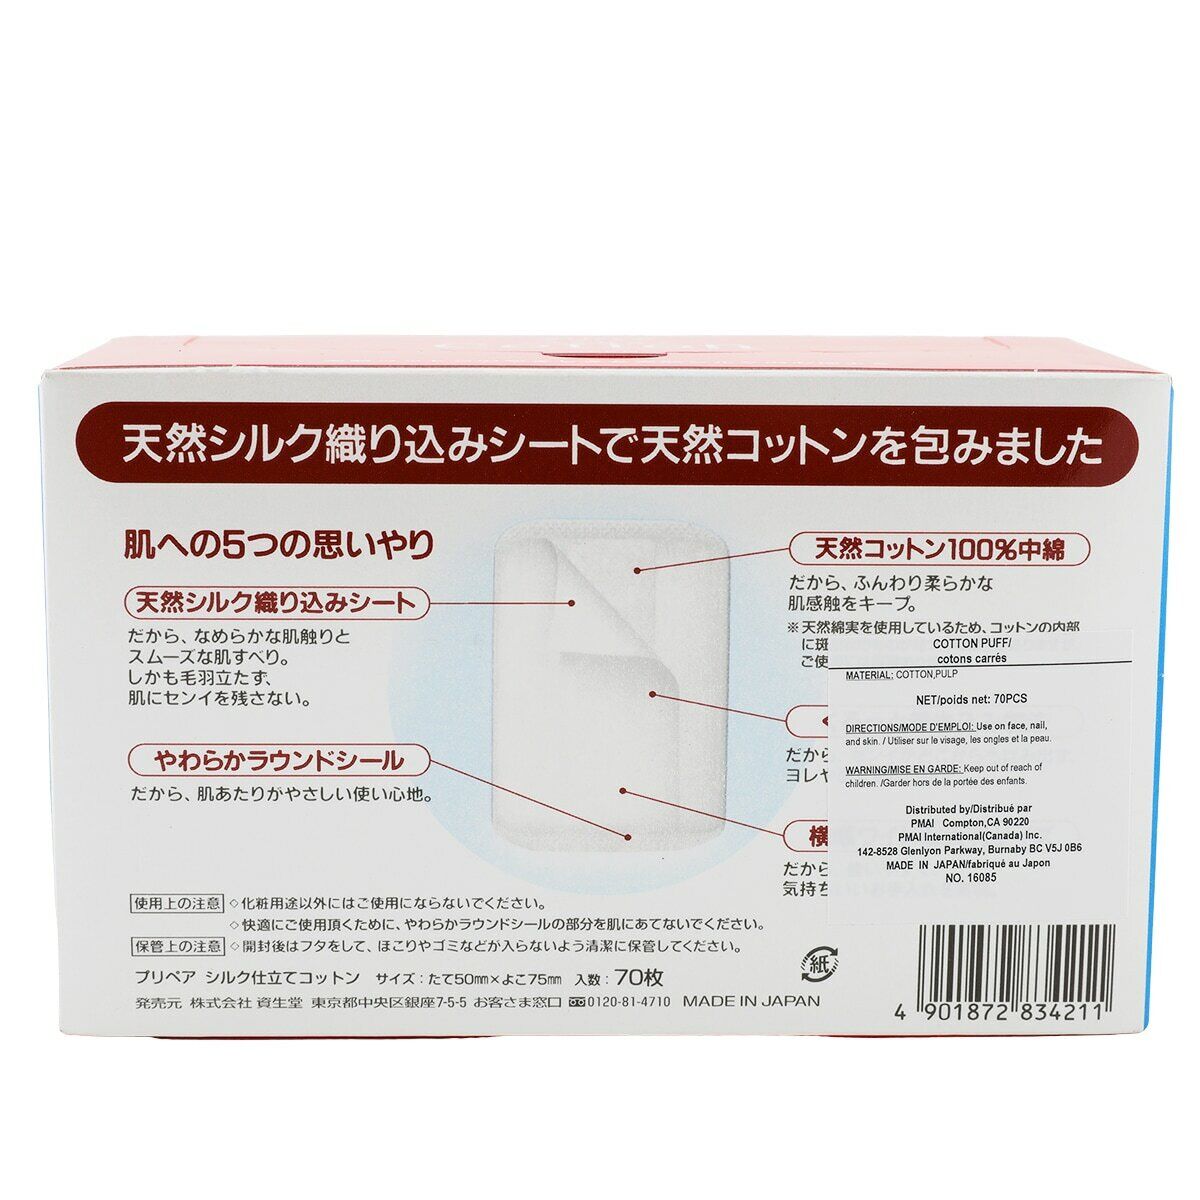 Shiseido Prepare Silk Cotton Pads Soft Multi-Purpose Cleaning 70 Sheets NEW